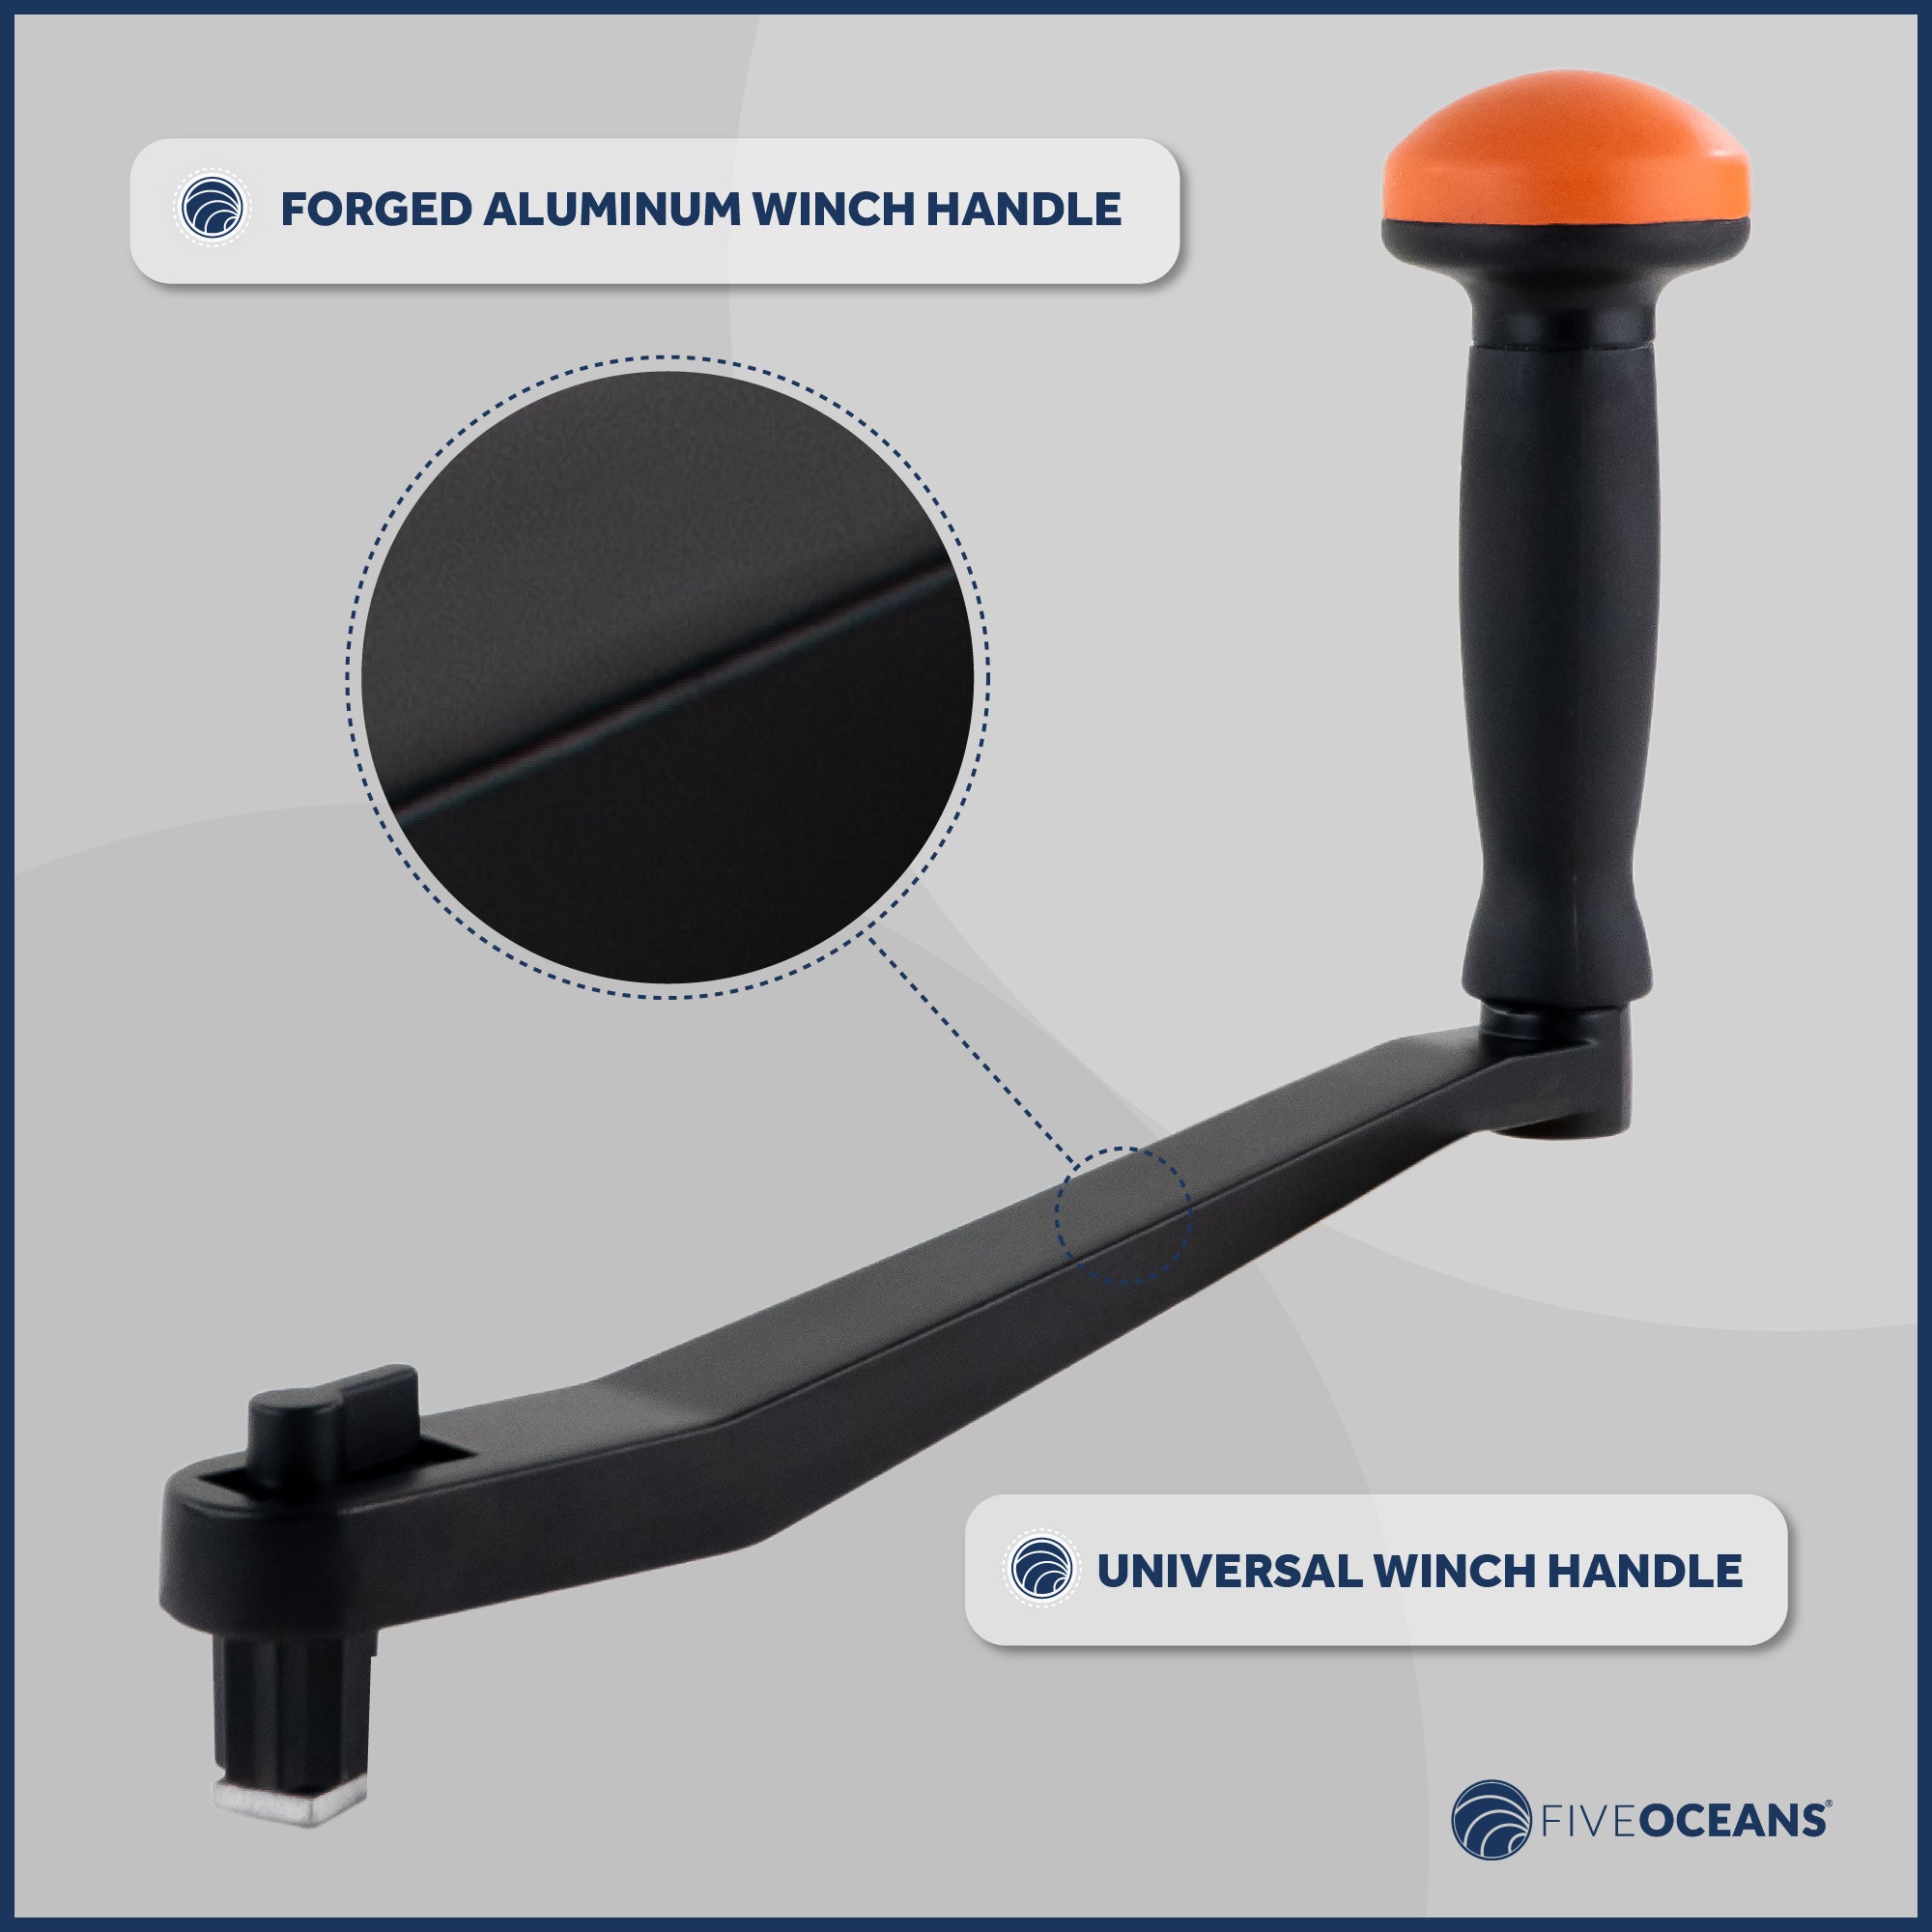 Universal Lock-in Style Winch Handle, 10" Black/Orange, 2-Pack - FO3743-M2